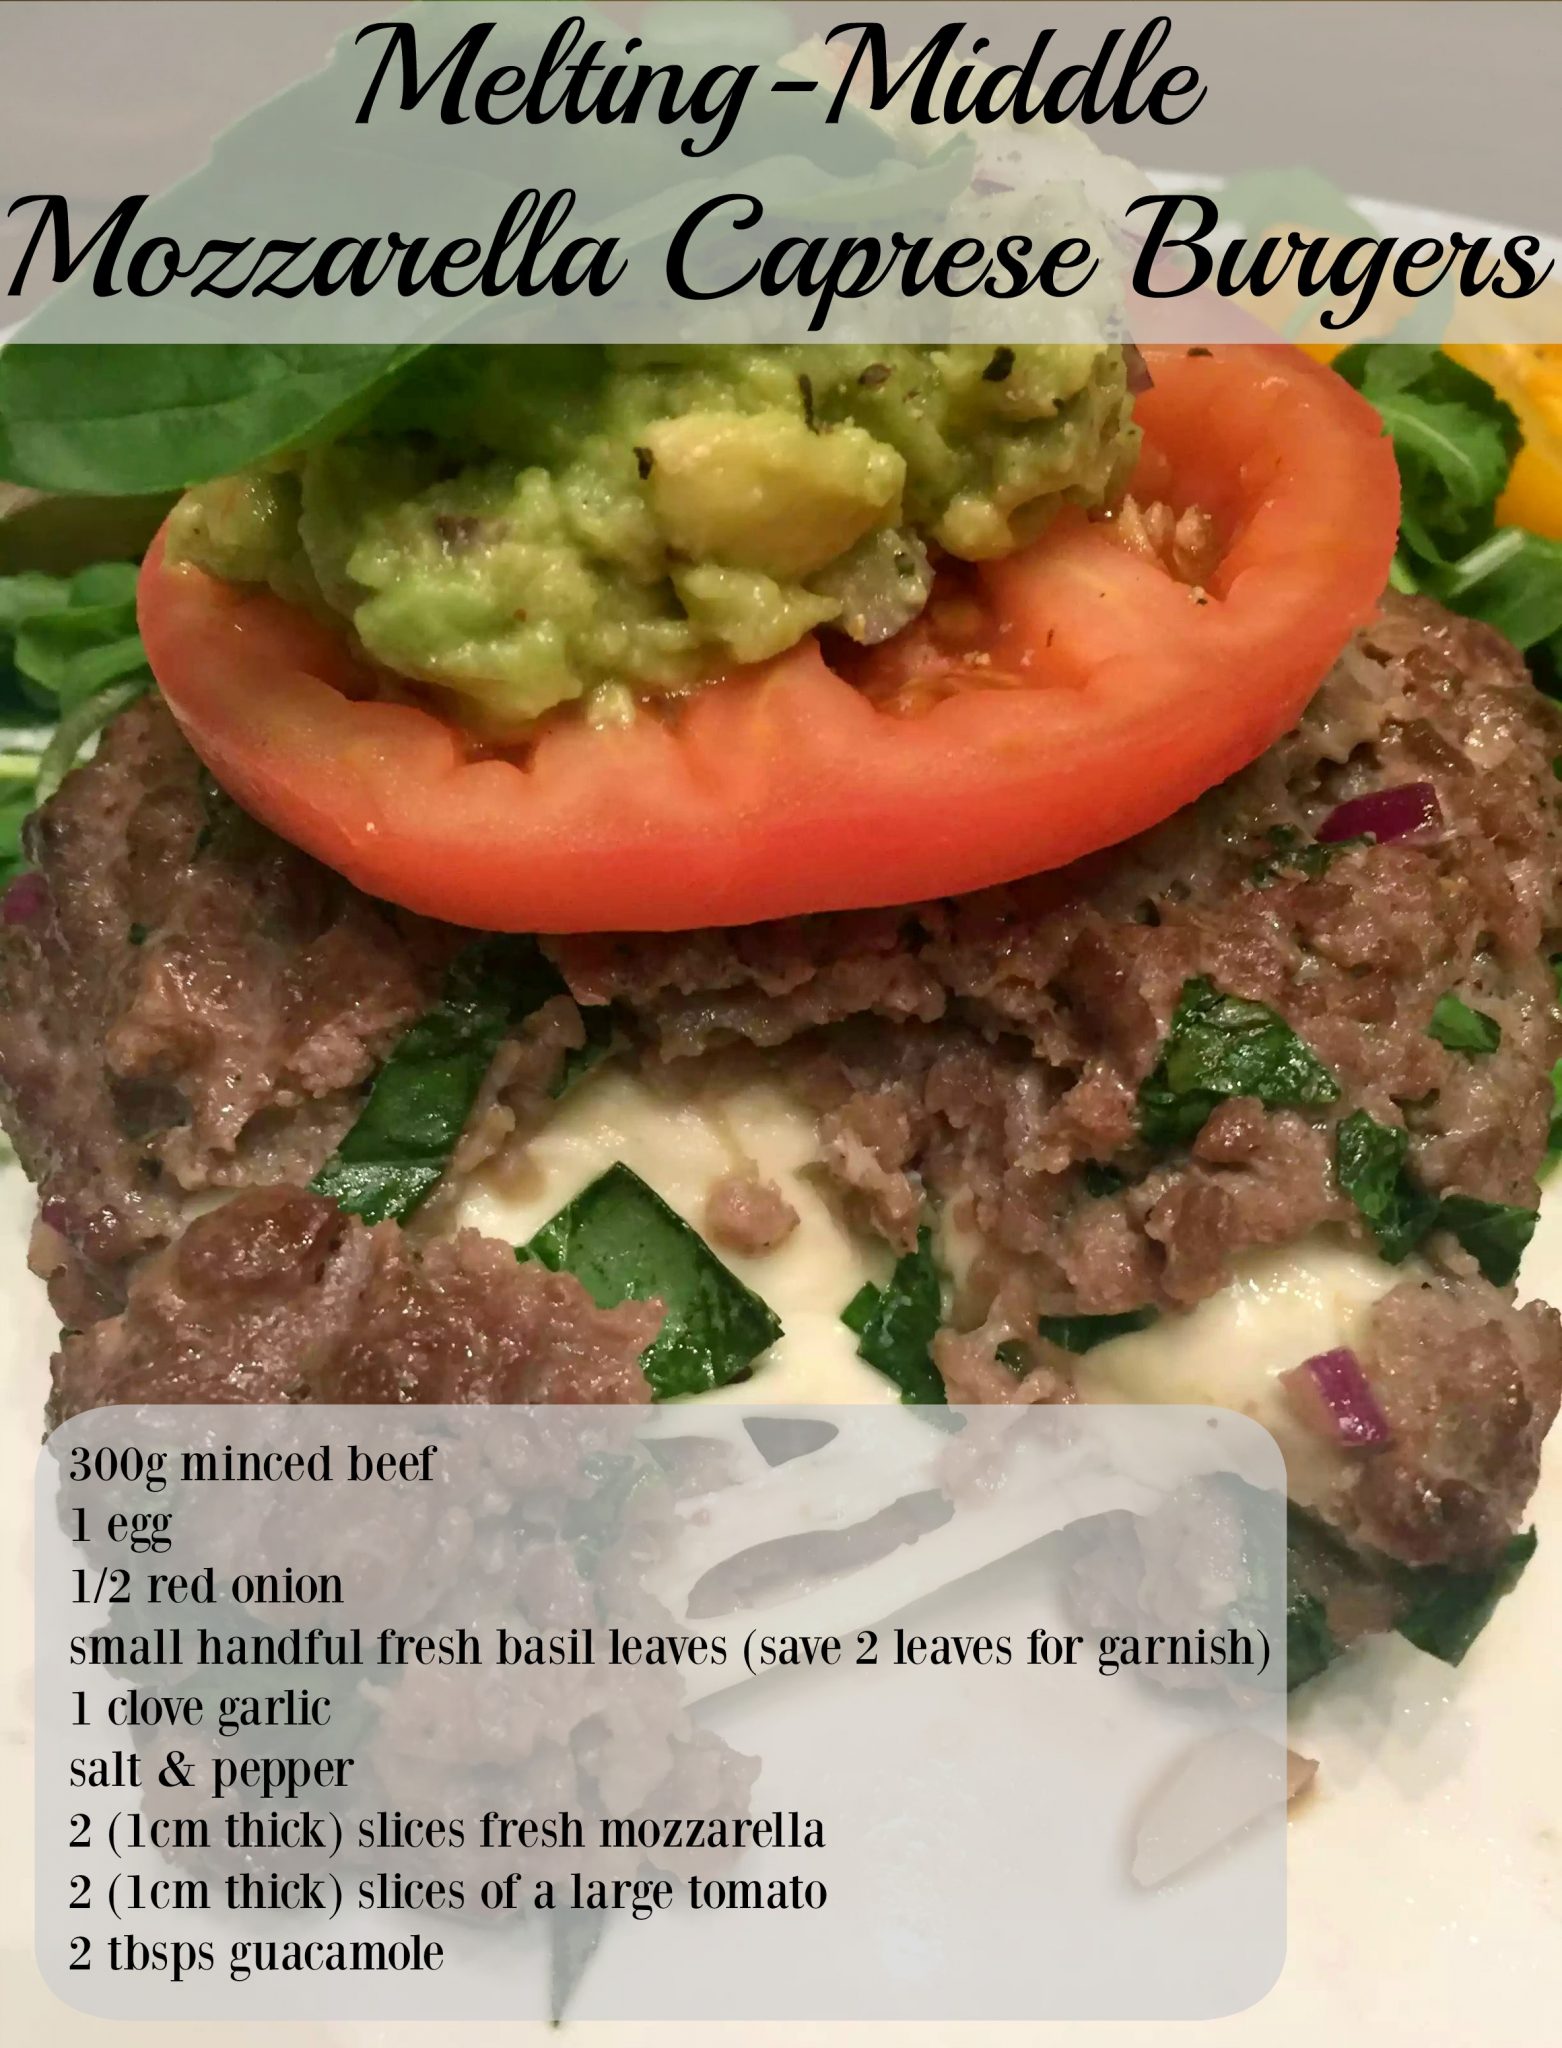 Melting-Middle Mozzarella Caprese Burgers by Emma Eats & Explores - SCD, Paleo, Clean Eating, Gluten-Free, Grain-Free, Sugar-Free